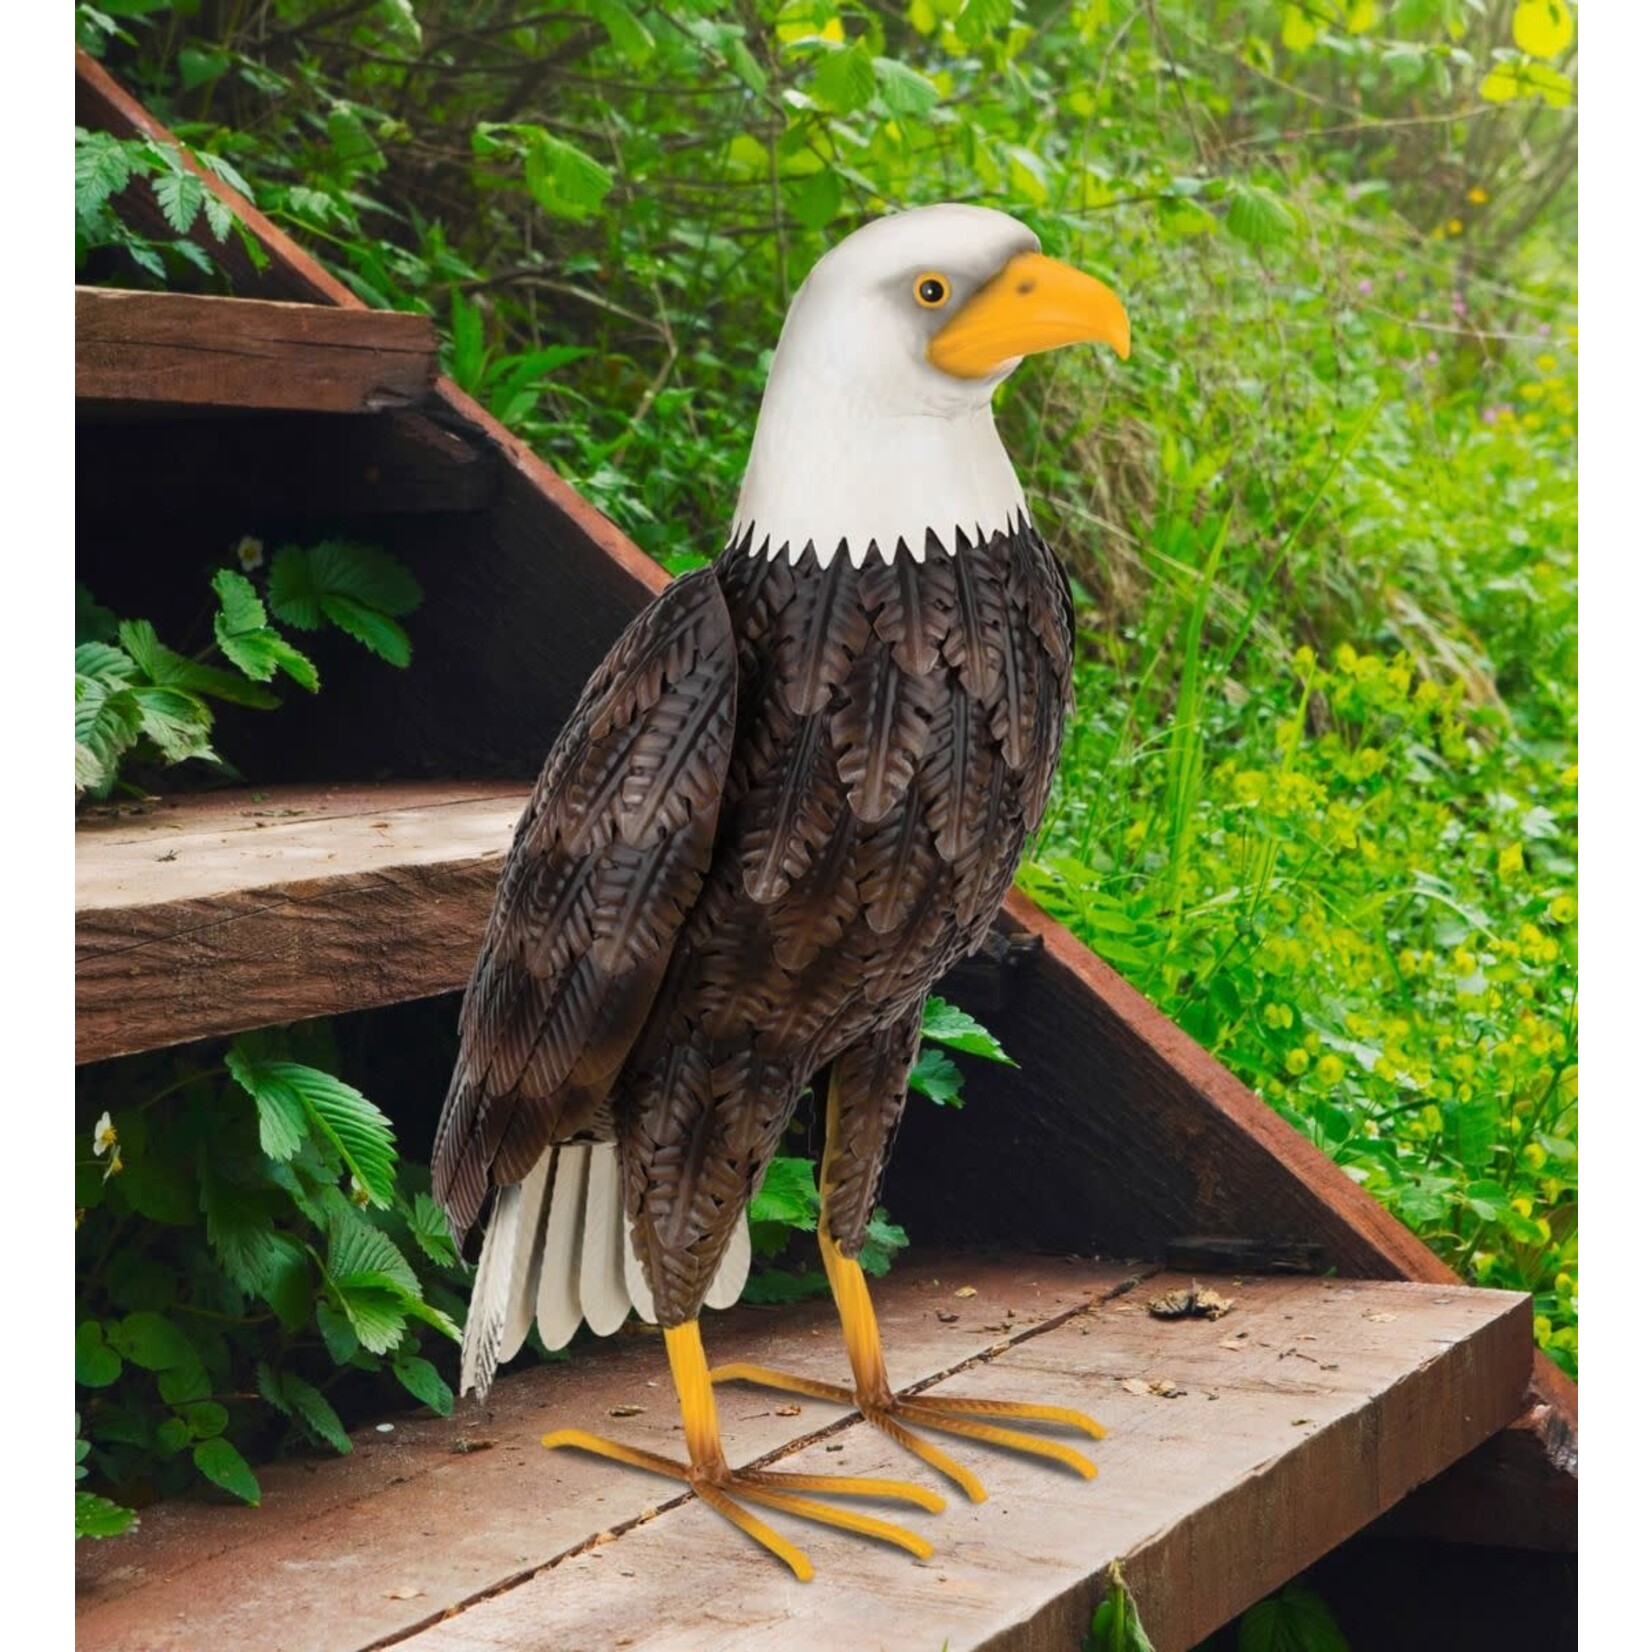 Regal Art & Gift Eagle Décor - Standing